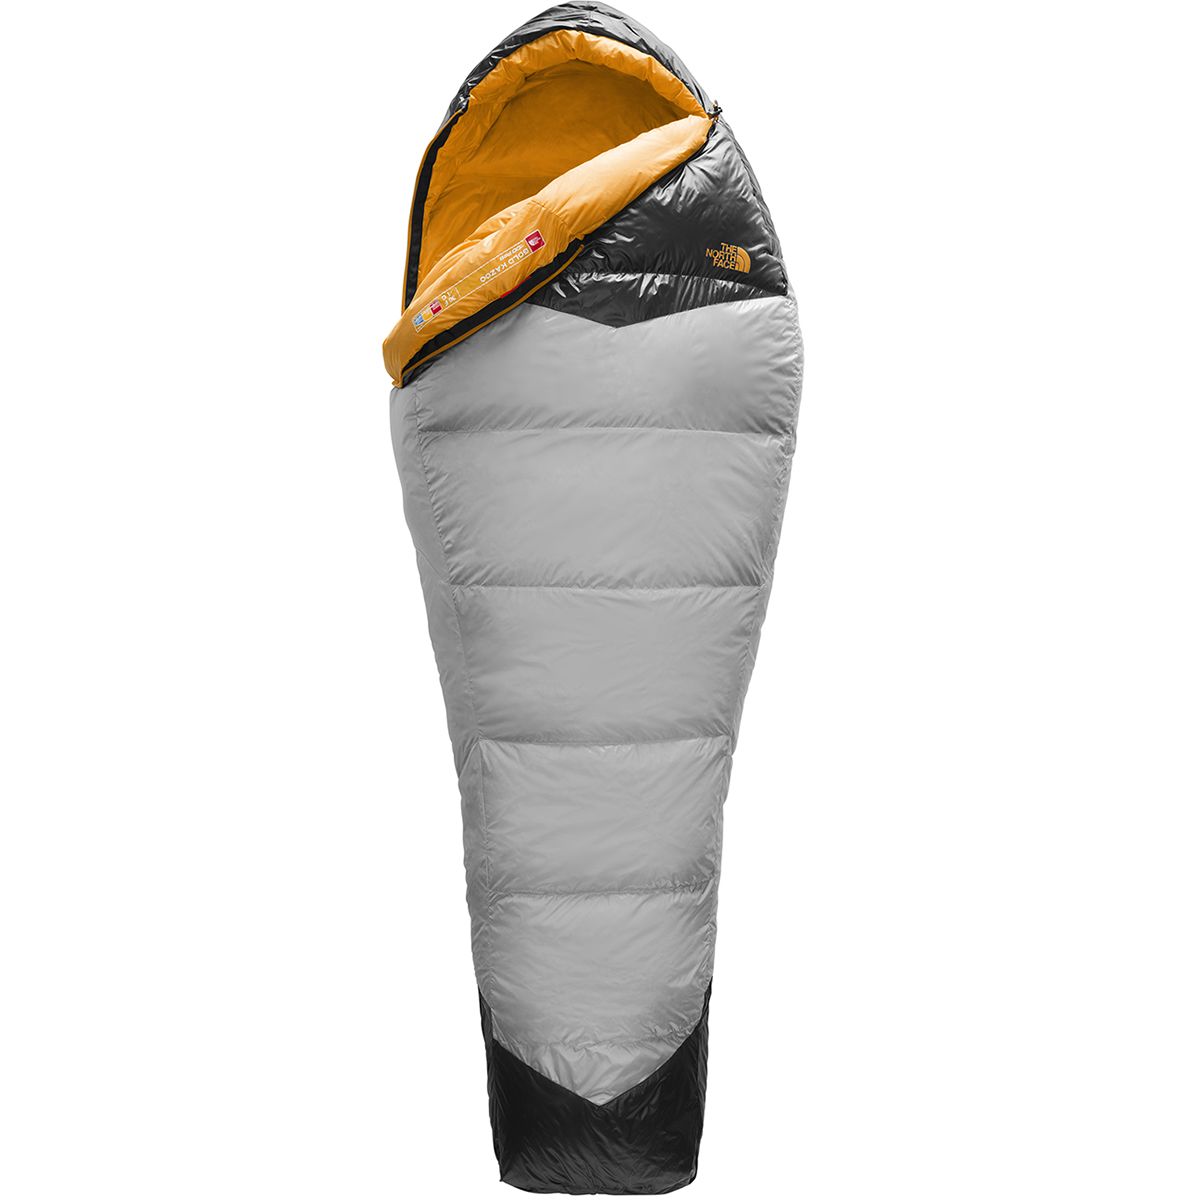 north face sleeping bag expander